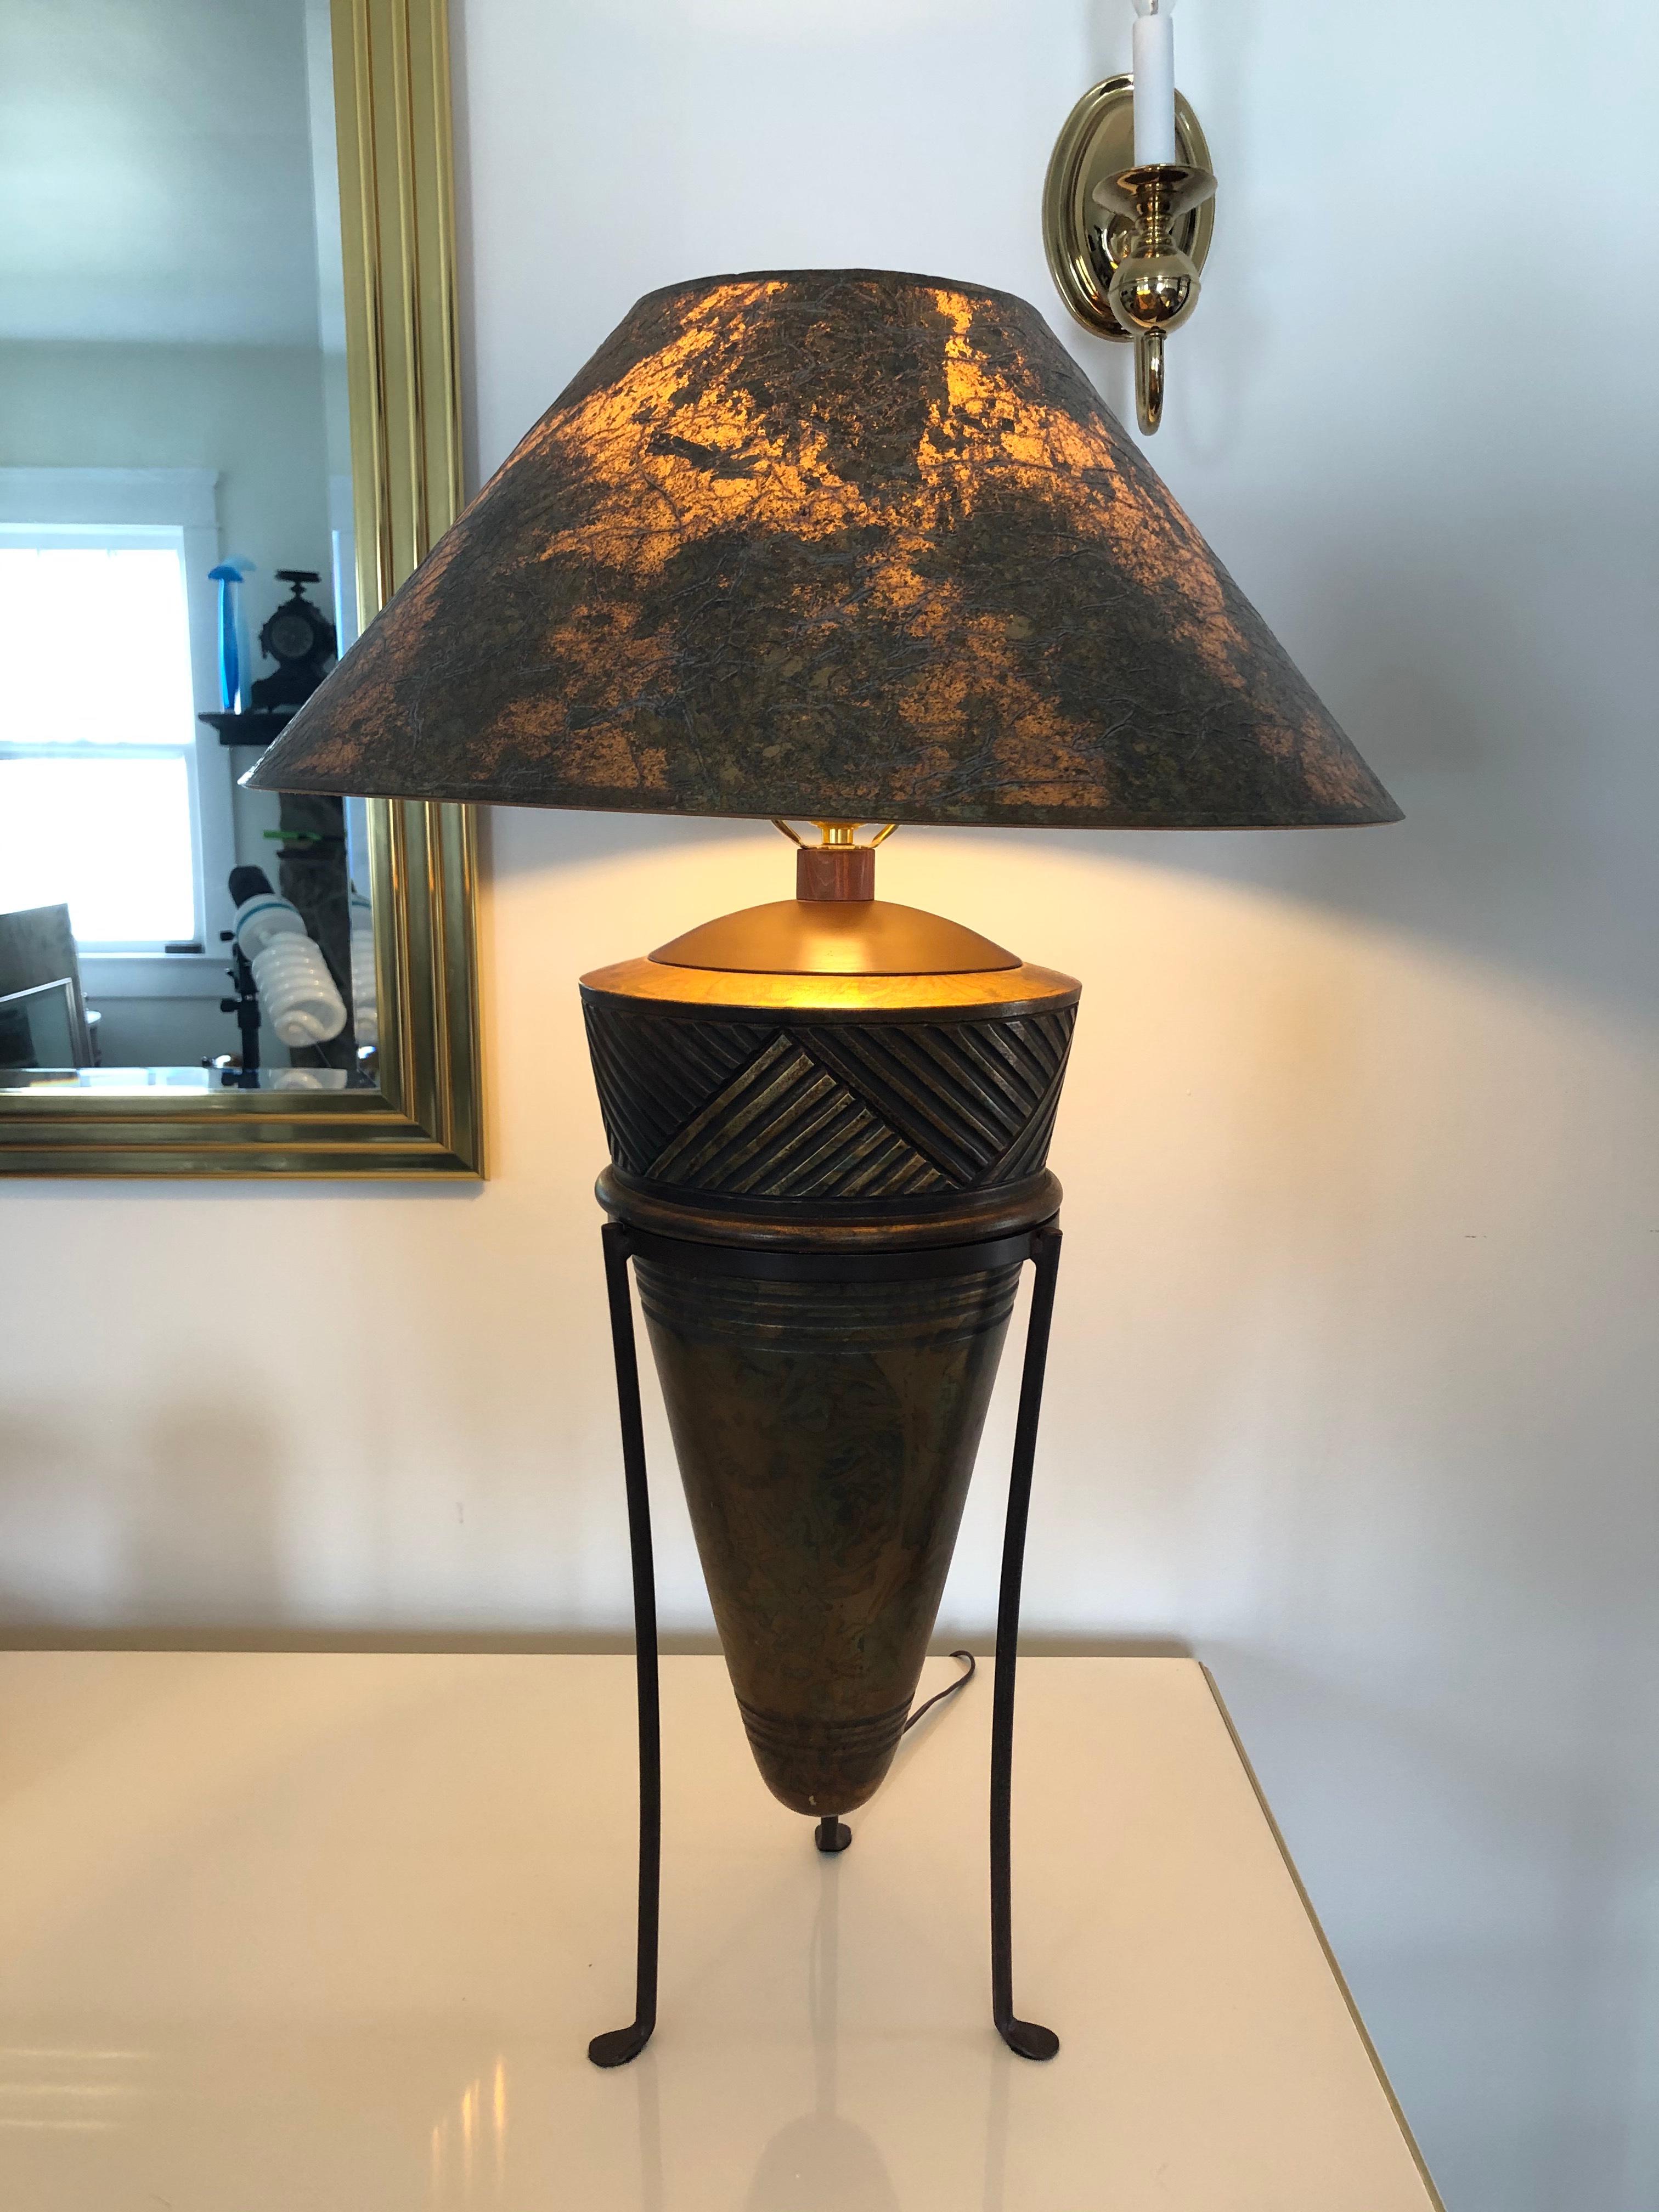 Postmoderne Lampe en poterie à urne au design postmoderne de style californien, sur pied en vente